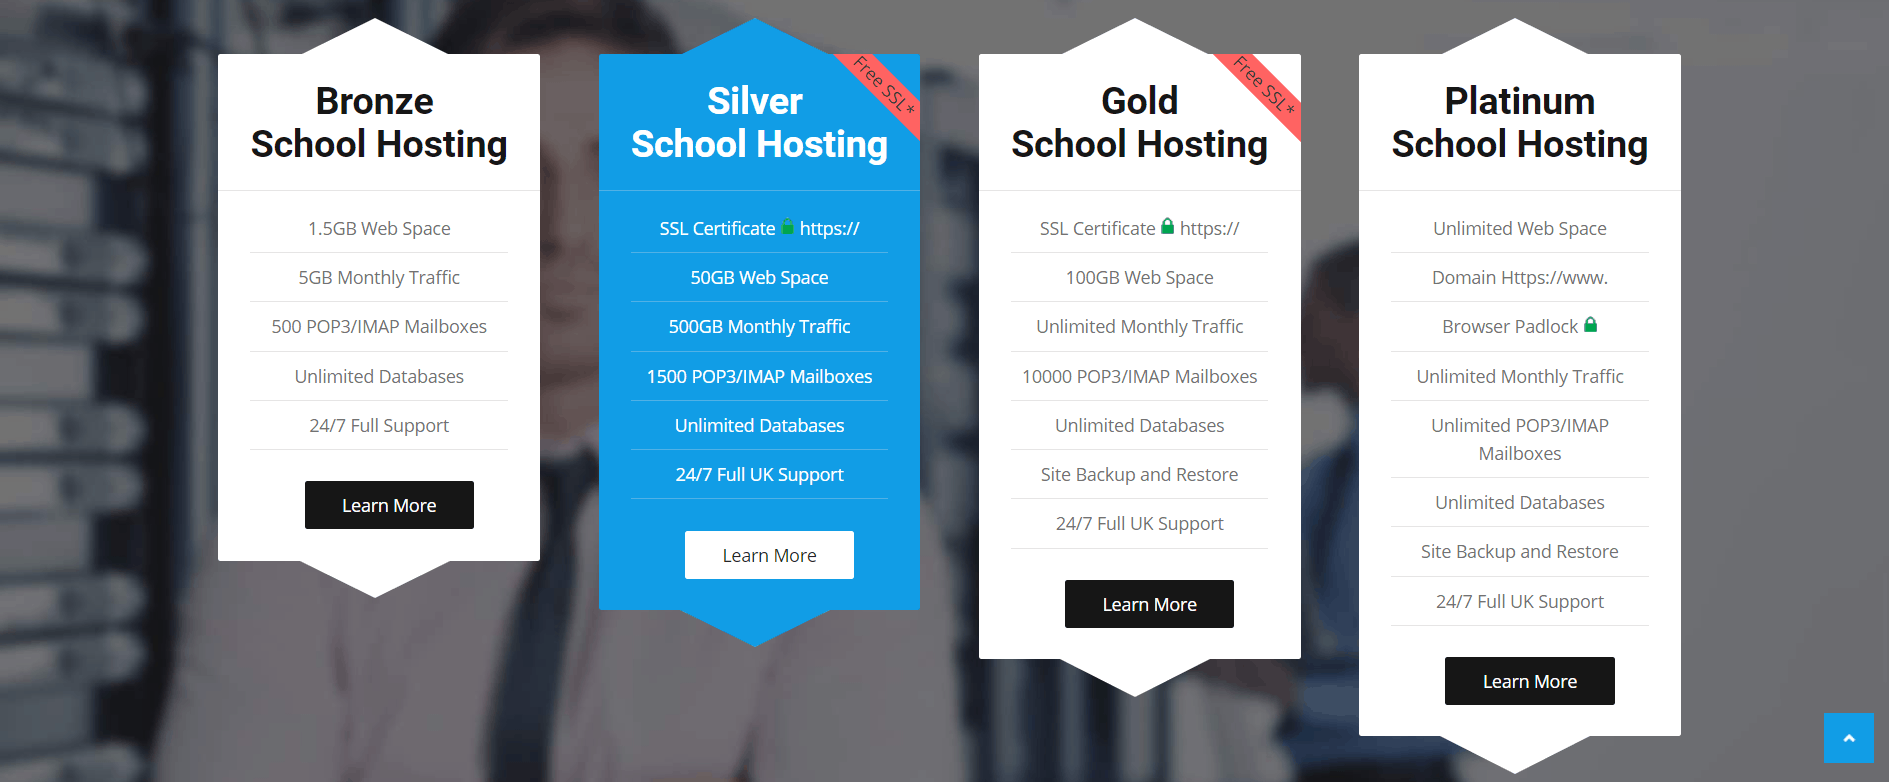 school-hosting-features